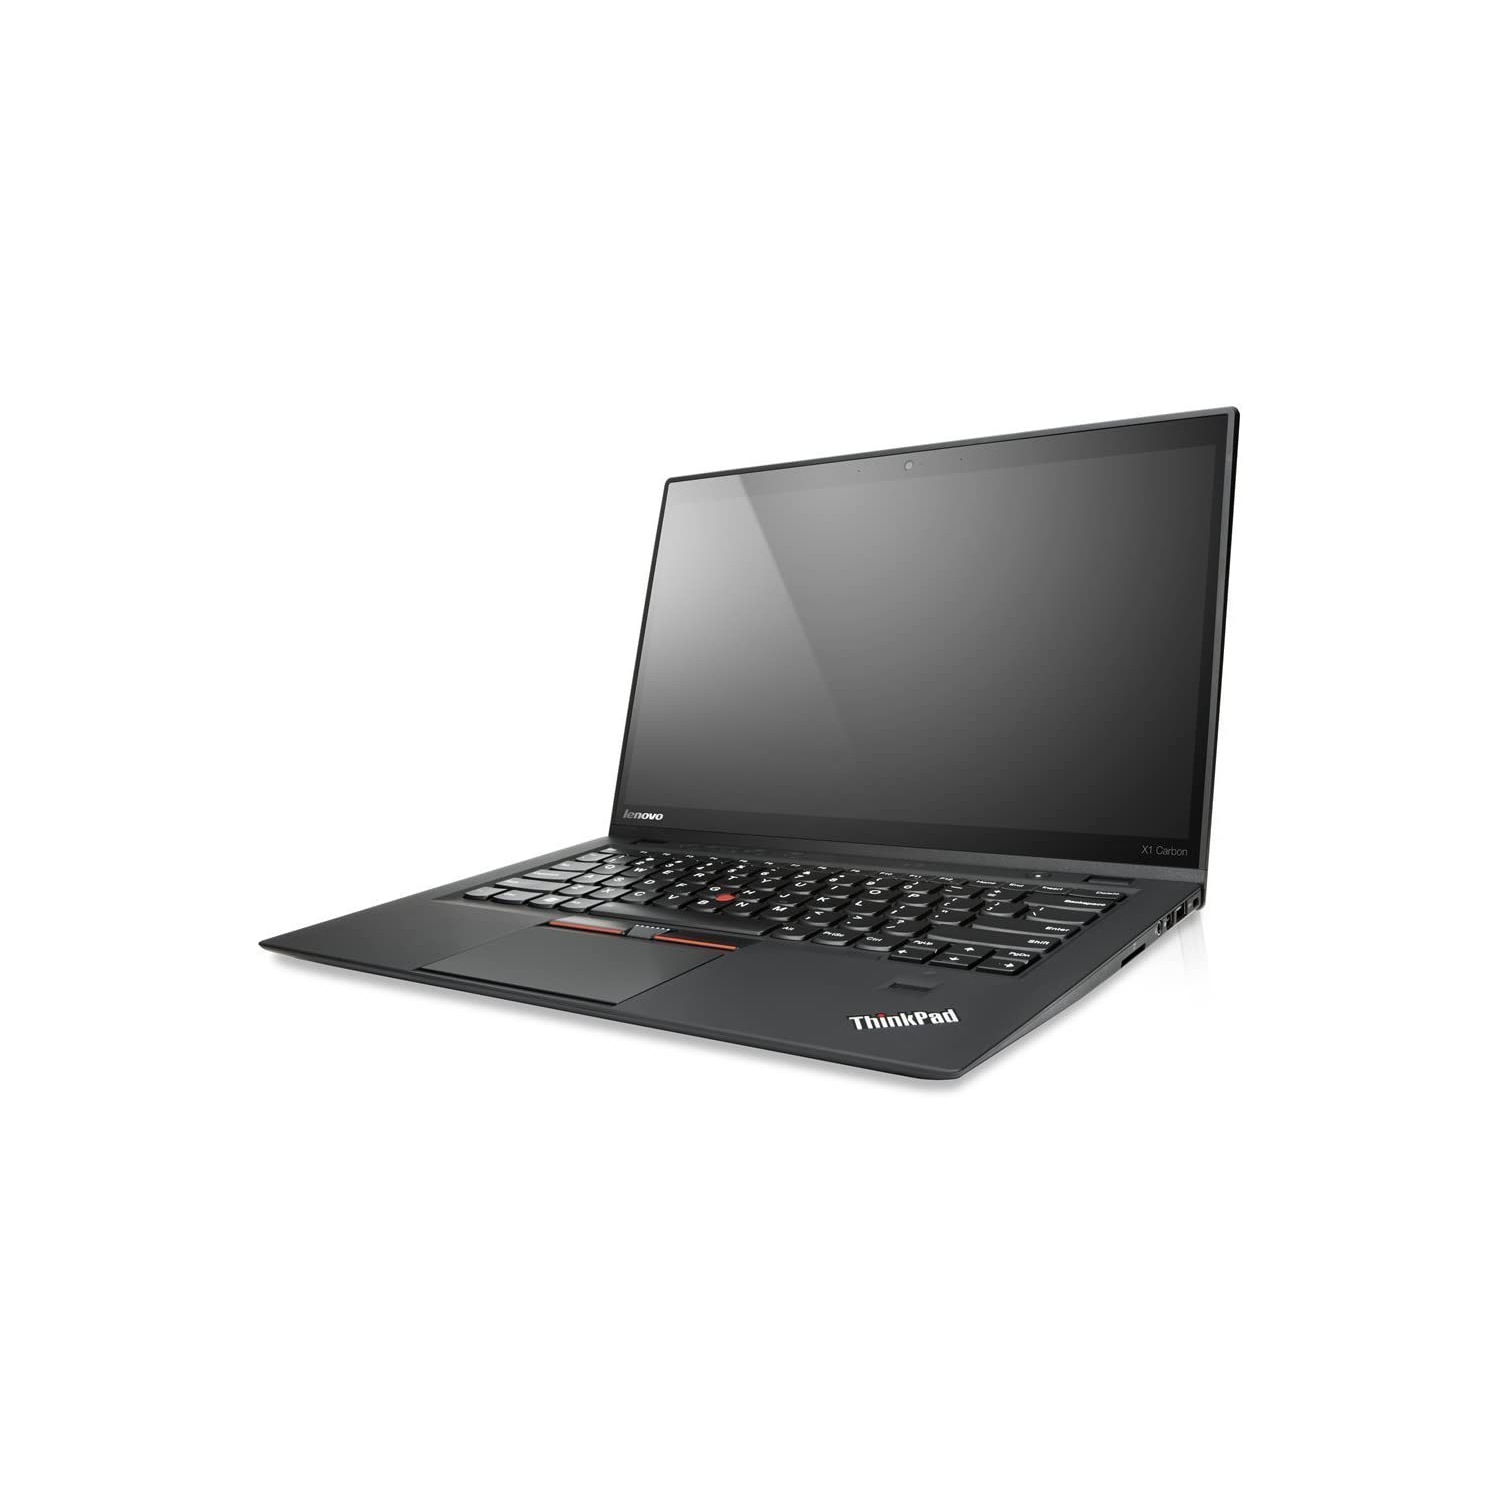 Refurbished (Good) - Lenovo ThinkPad X1 Carbon 3rd Gen 14" Ultrabook (Touch Screen) - Intel Core i7-5600U @ 2.6G, 8GB RAM, 256GB SSD, Win 10 Pro